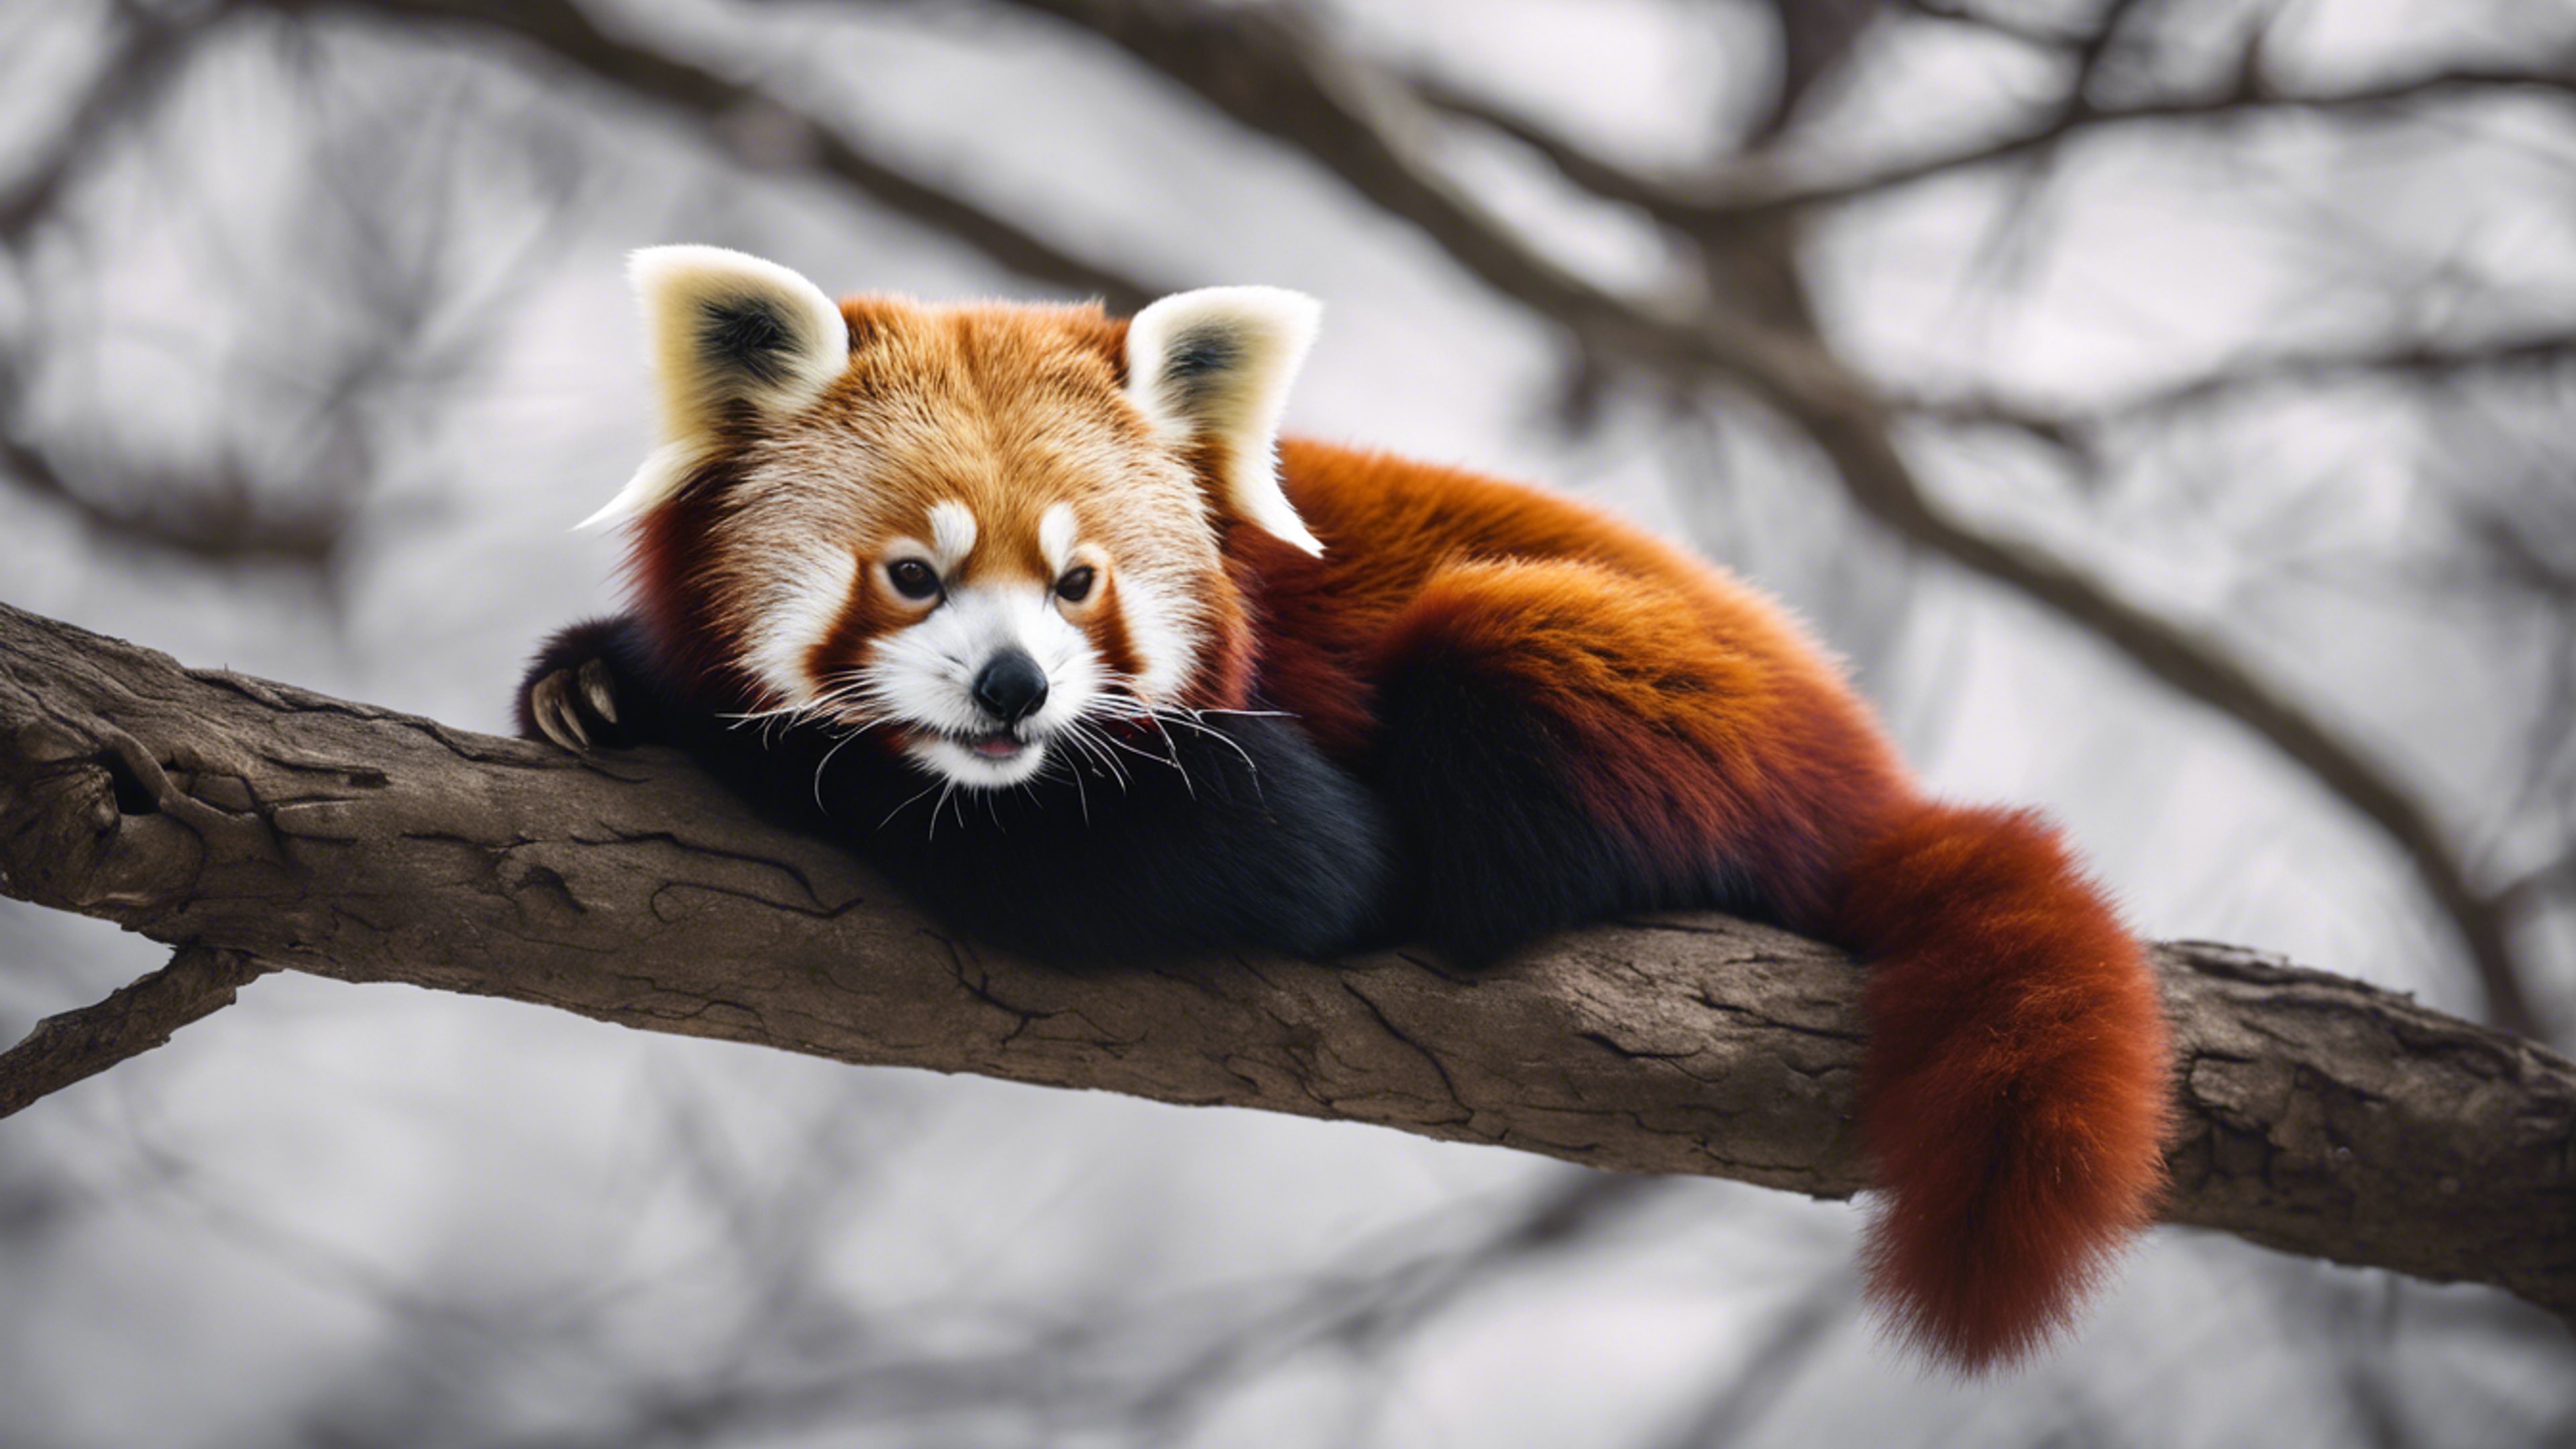 A red panda enjoying a peaceful nap on a thick tree branch. Tapeta[0844f7d1c6274207ac91]